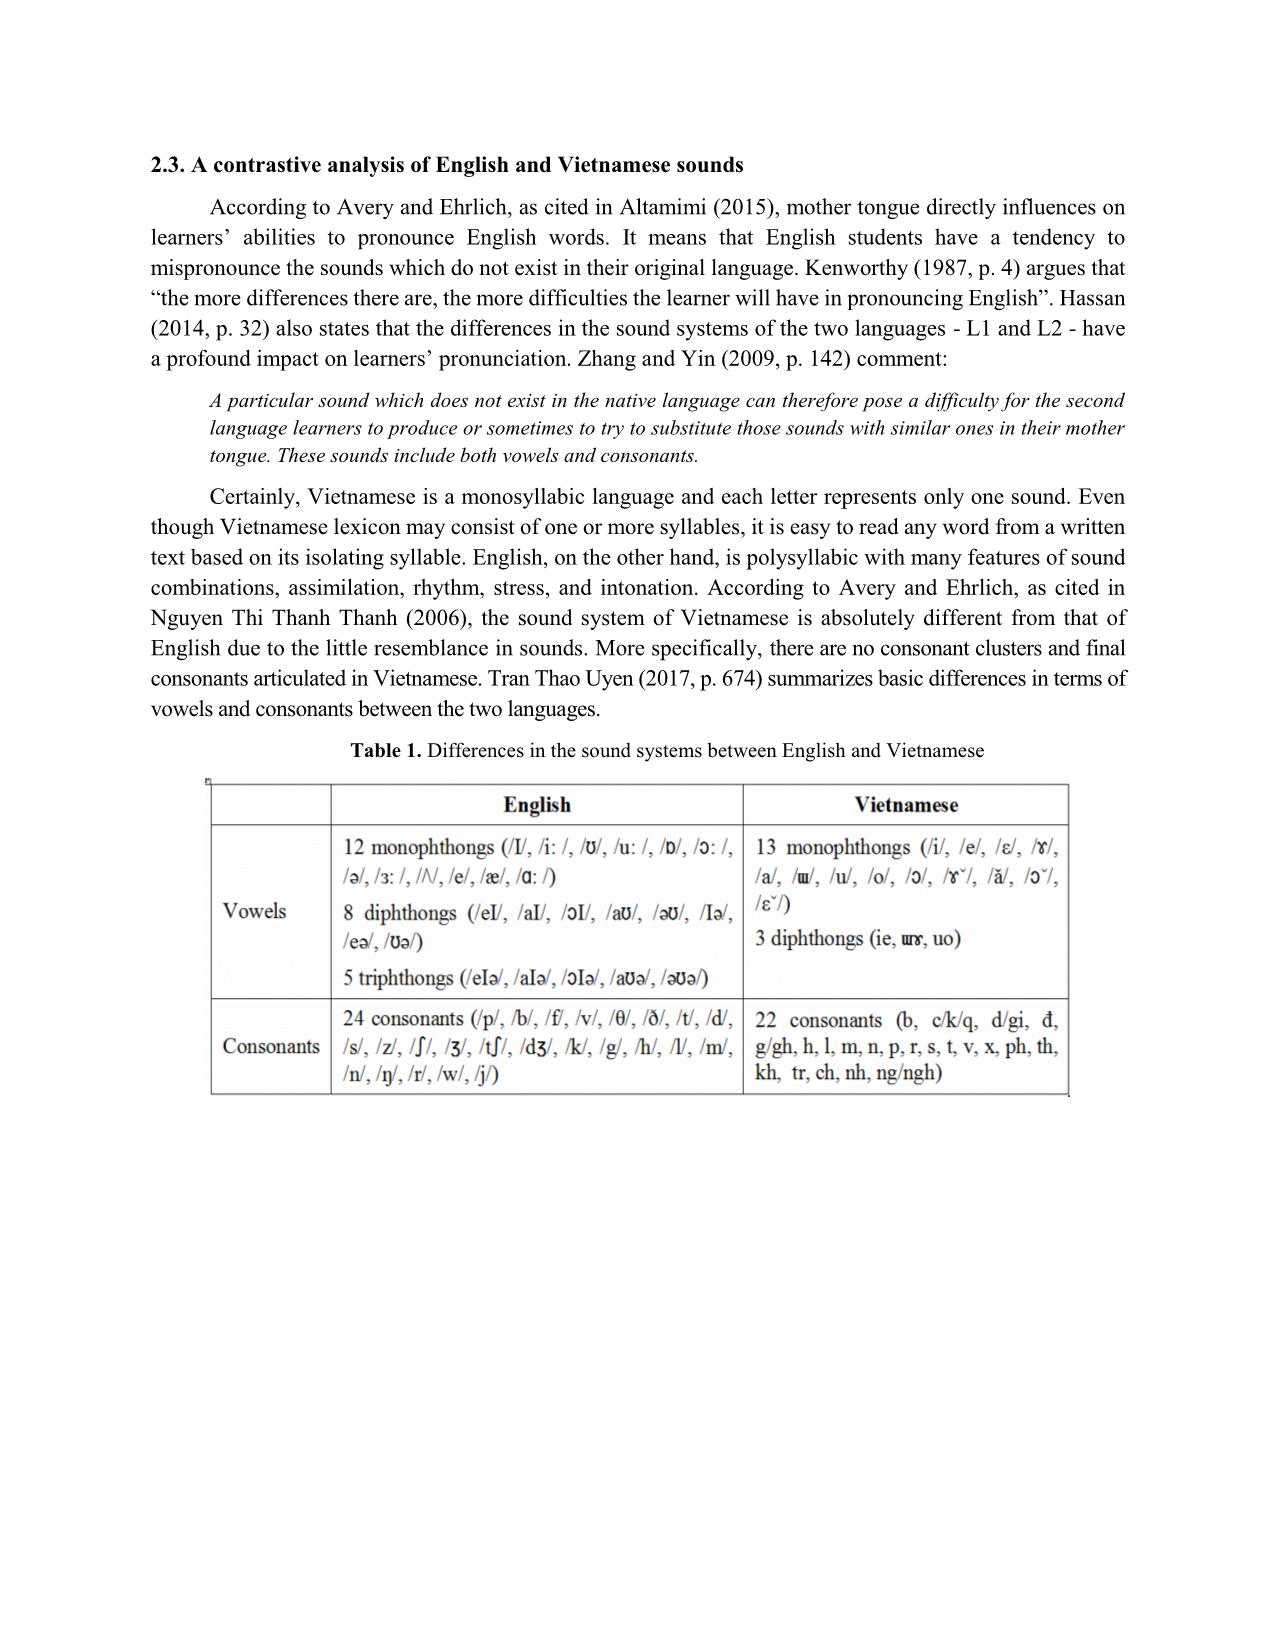 Major problems in pronouncing English: A case study at the University of Dalat trang 3